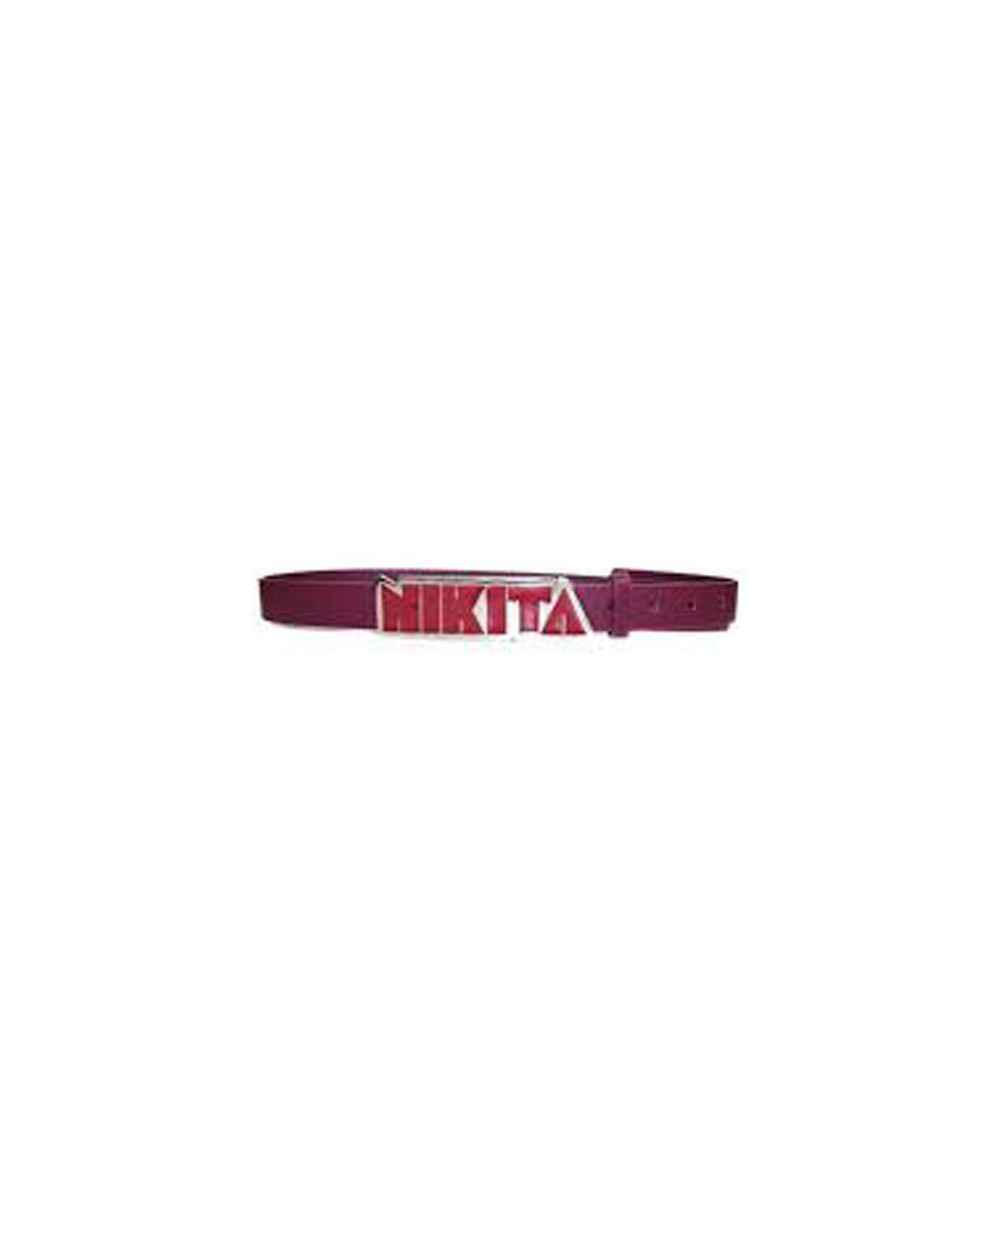 Nikita Sunnyside Belt Beetred - Cinturones